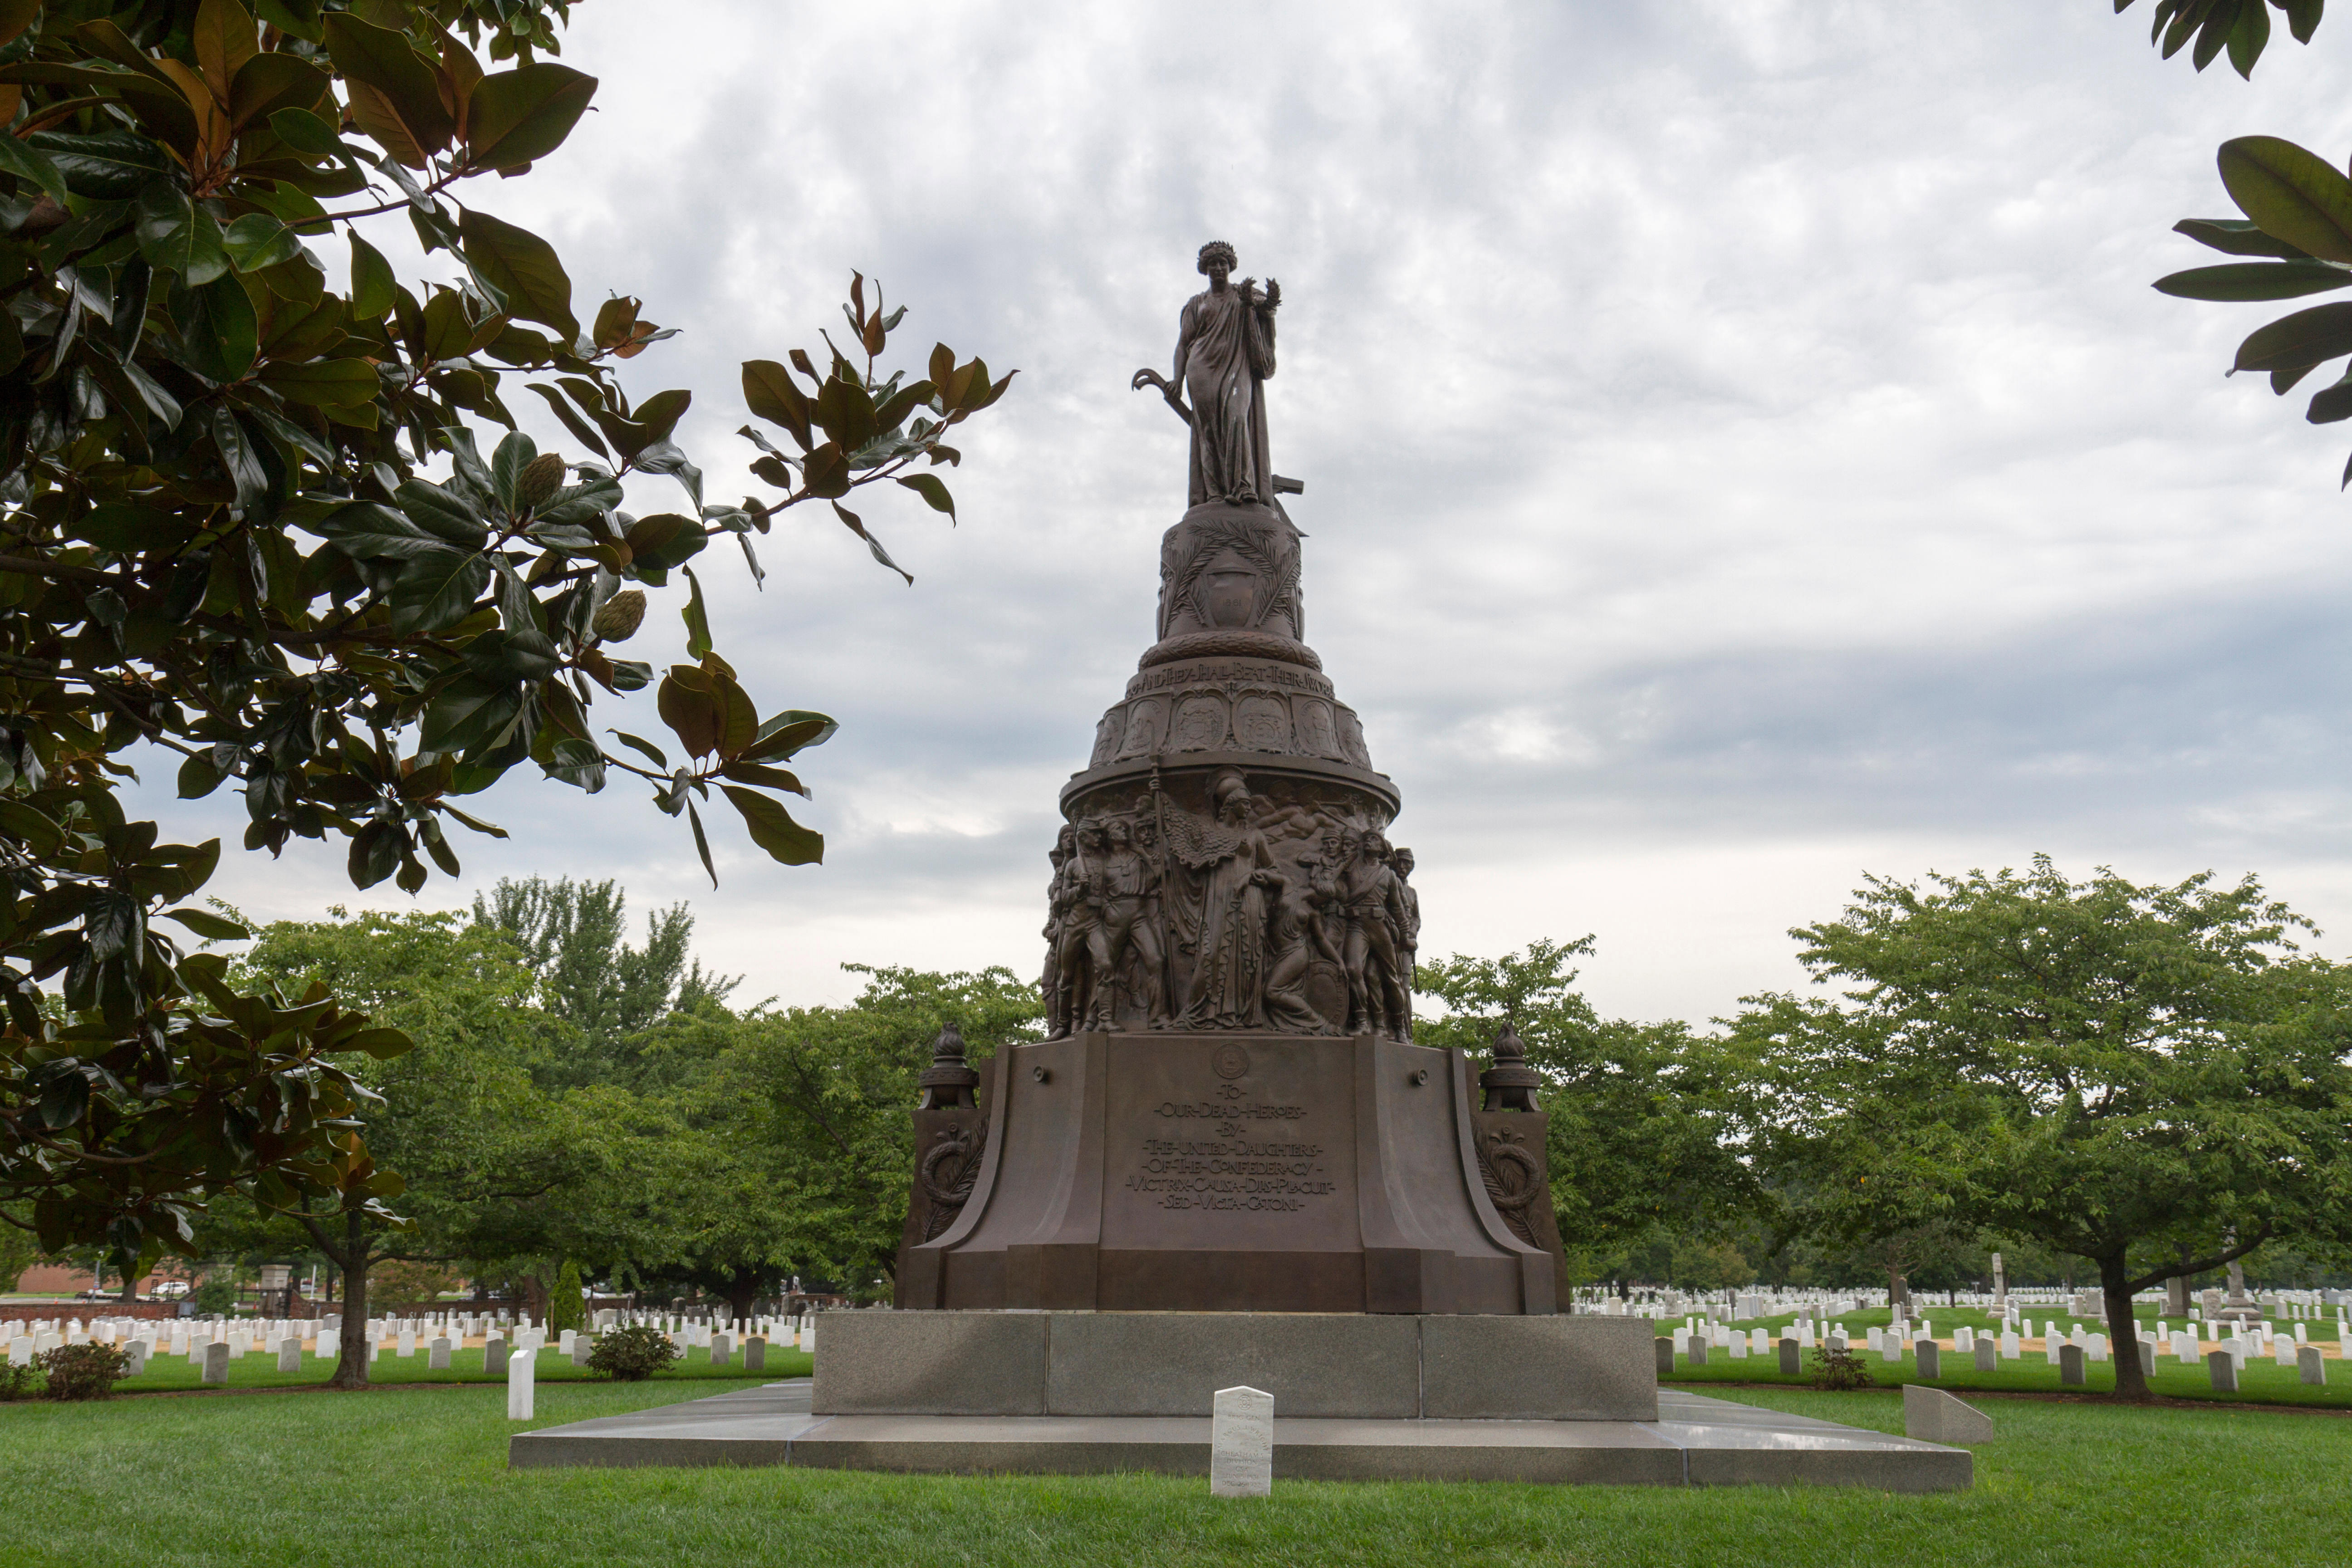 Arlington National Cemetery’s Confederate memorial